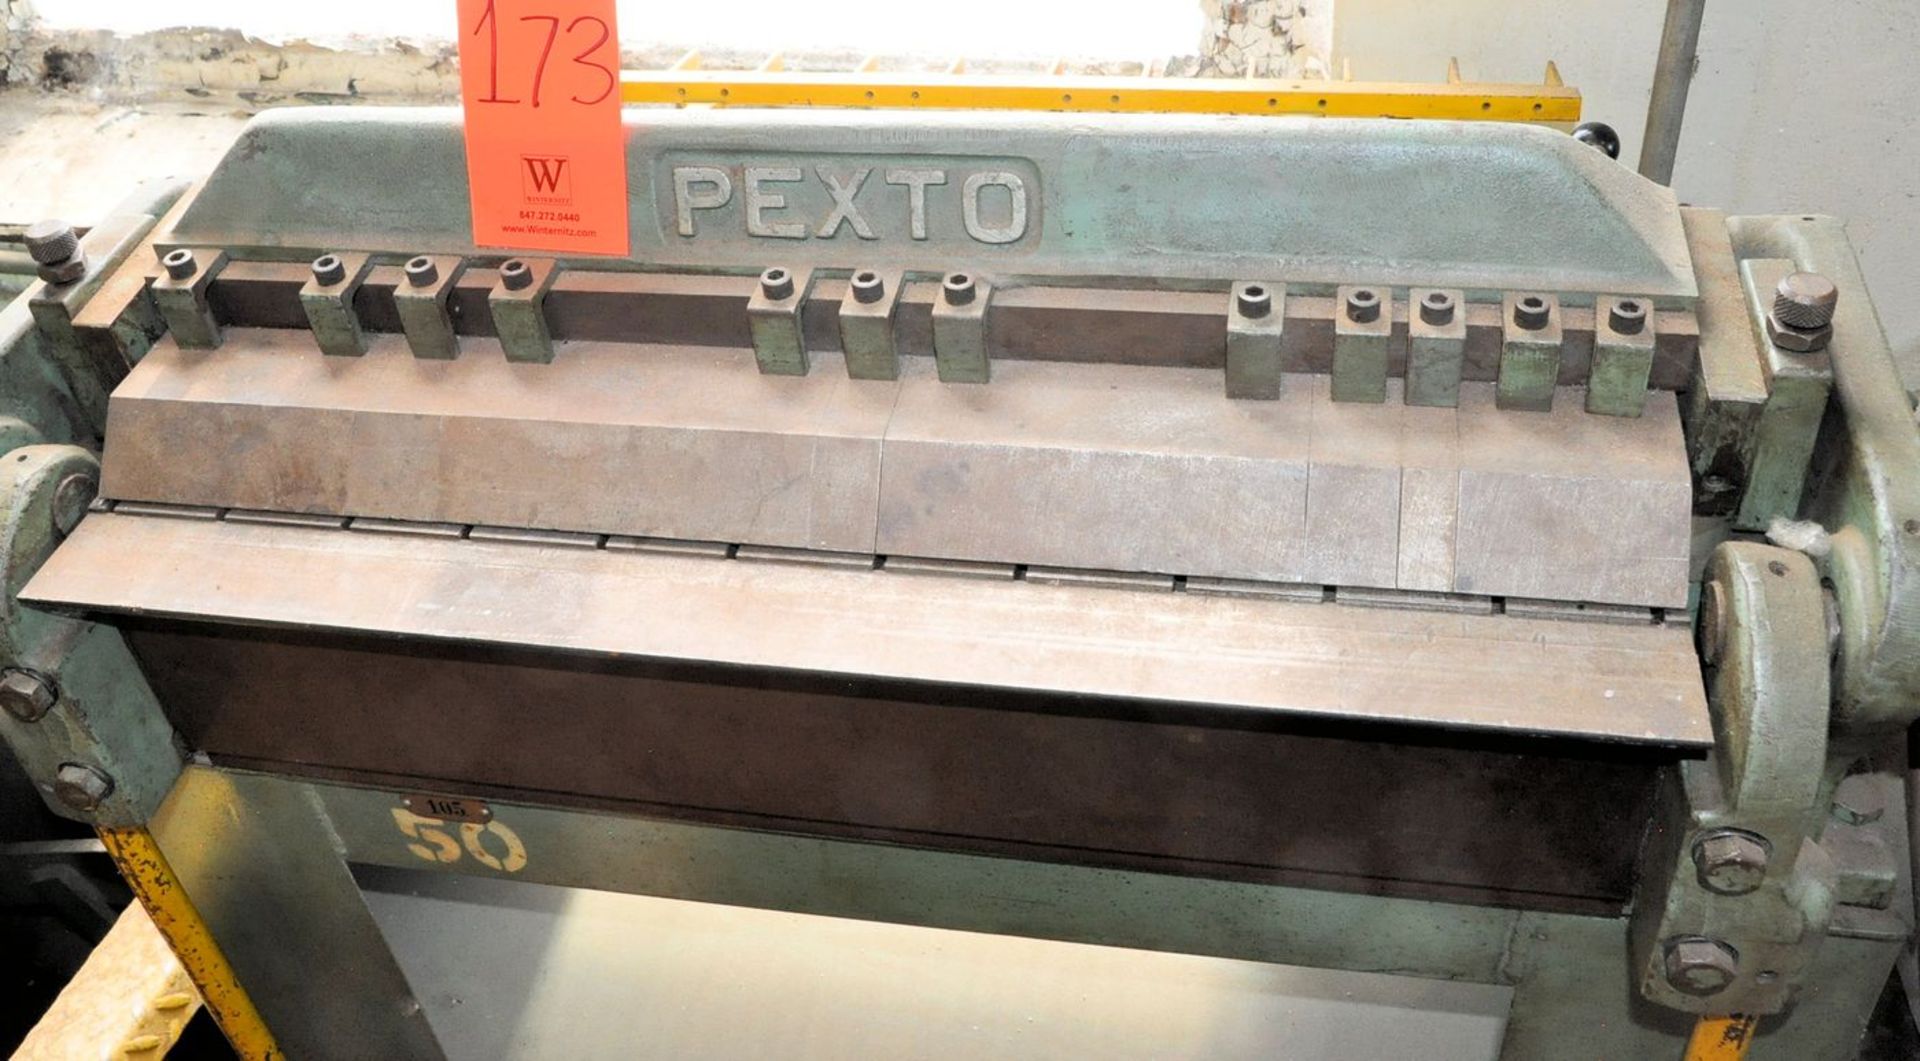 Pexto Model PX24A 16 Gauge X 24" Manual Finger Brake, S/N 270D on Steel Stand - Image 2 of 2